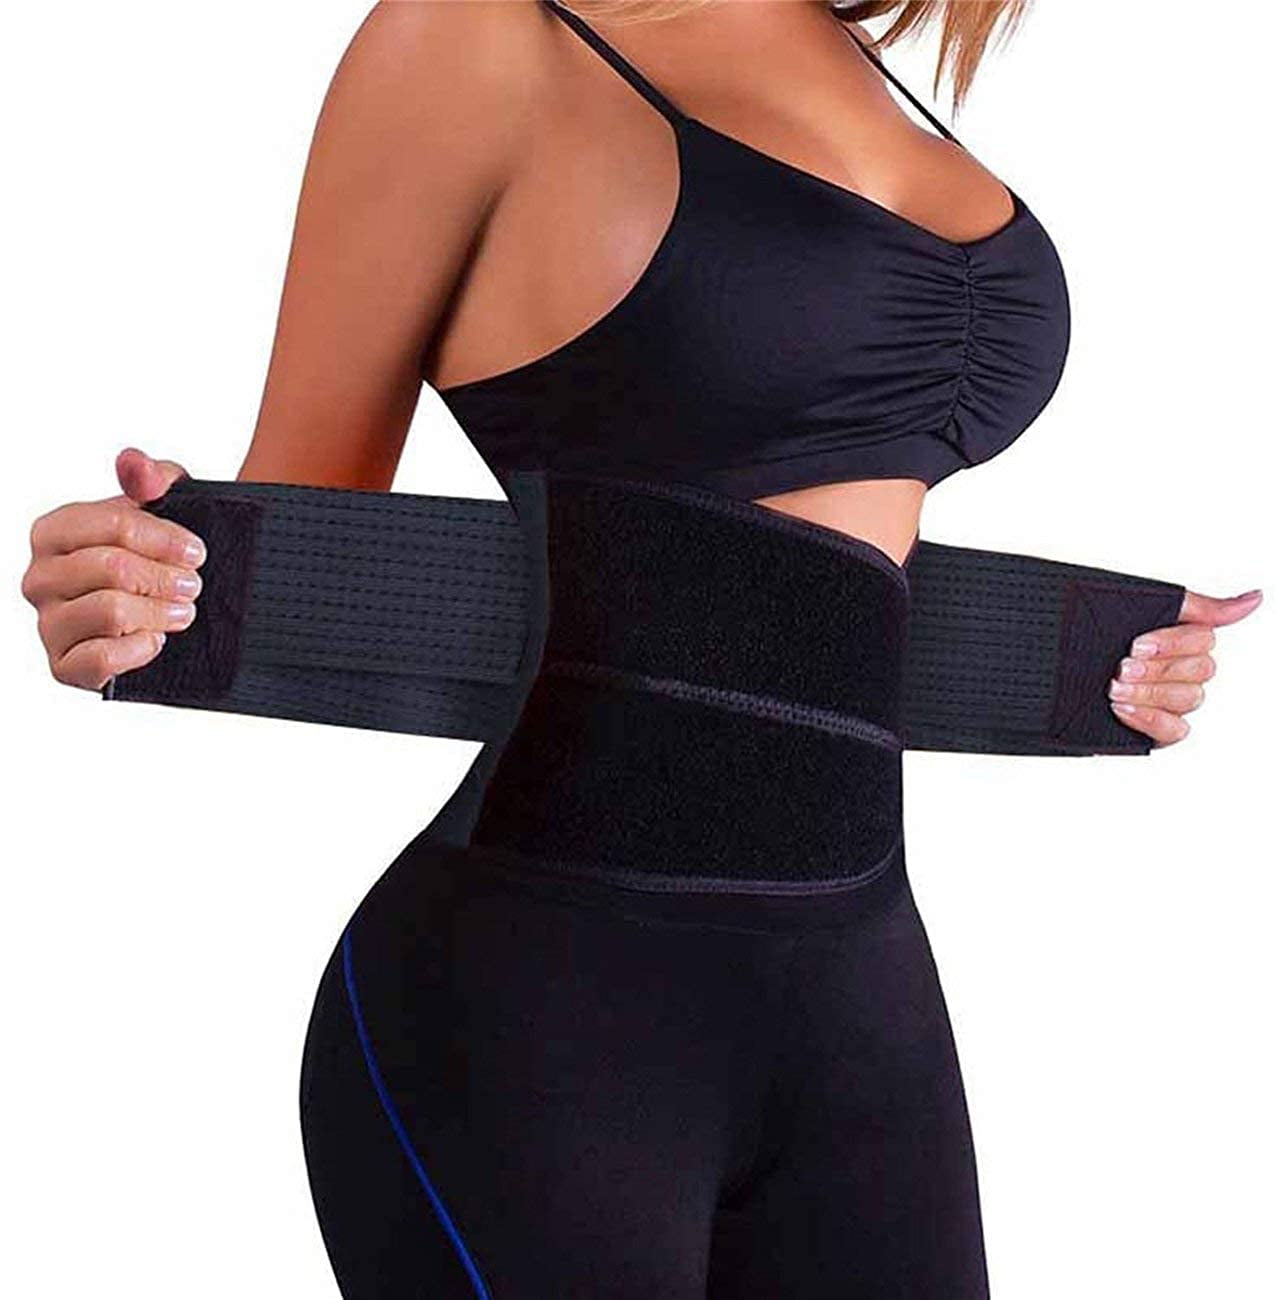 Waist Cincher Trimmer Tummy Wrap Sport Girdle Slimming Body Shaper Belt lttcbro Waist Trainer for Women Plus Size 